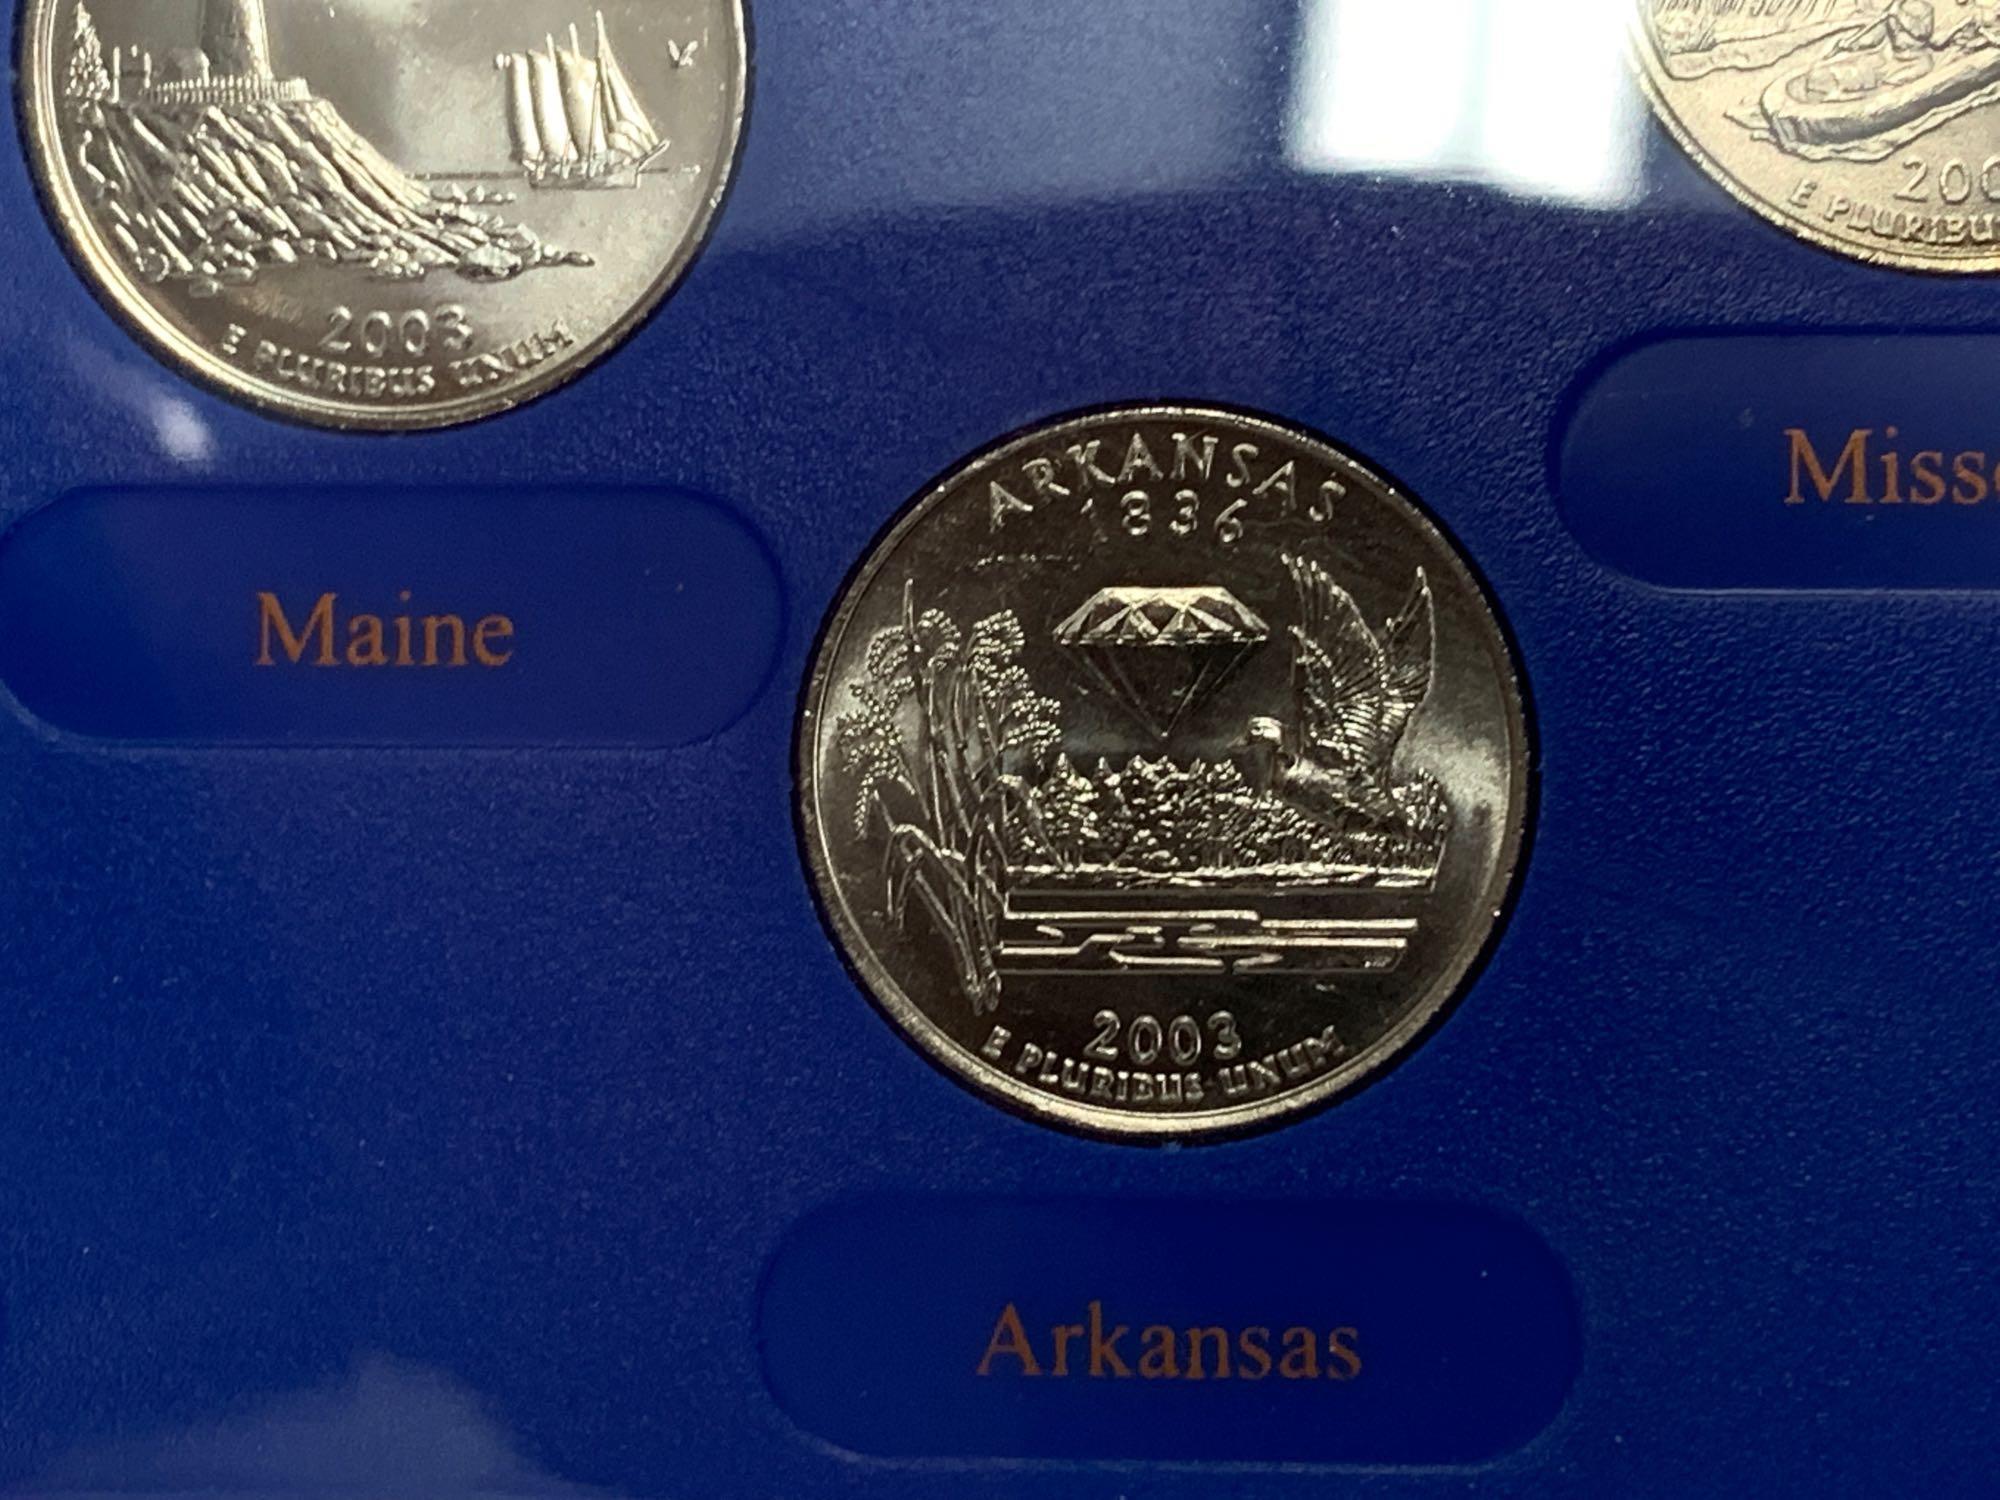 2003 Philadelphia Mint Edition State Quarter Collection